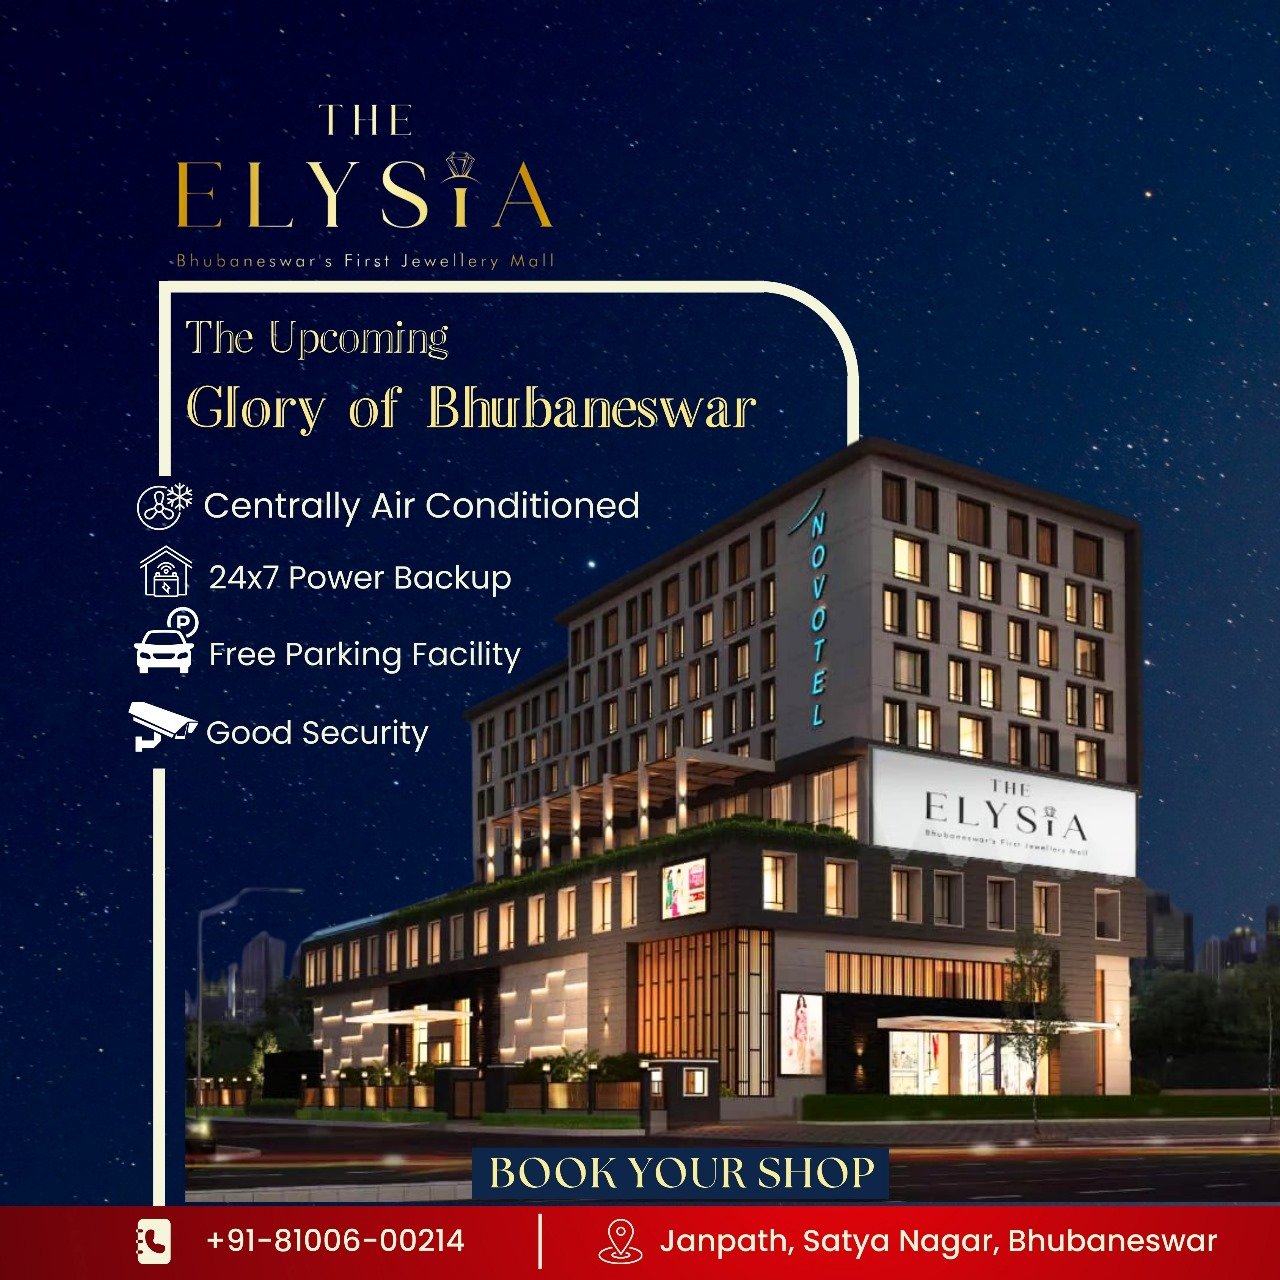 the elysia